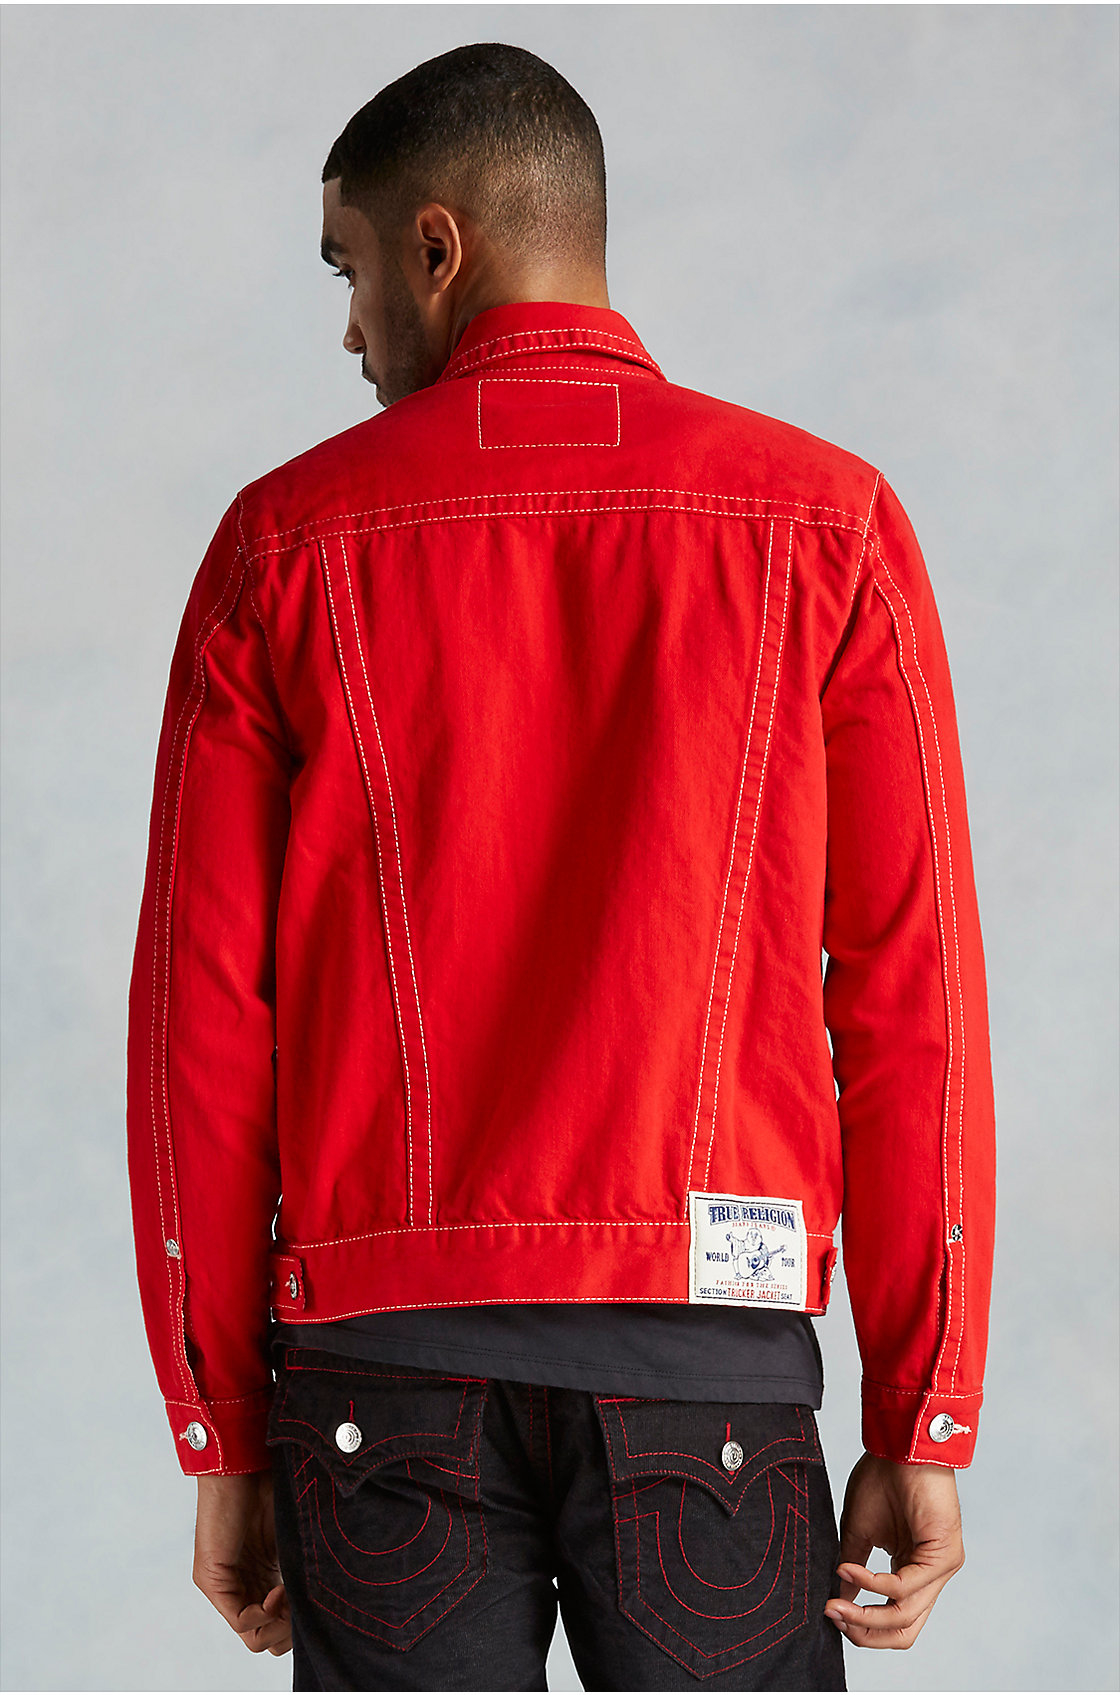 Red Jean Jacket Mens Photo Album - Vicing